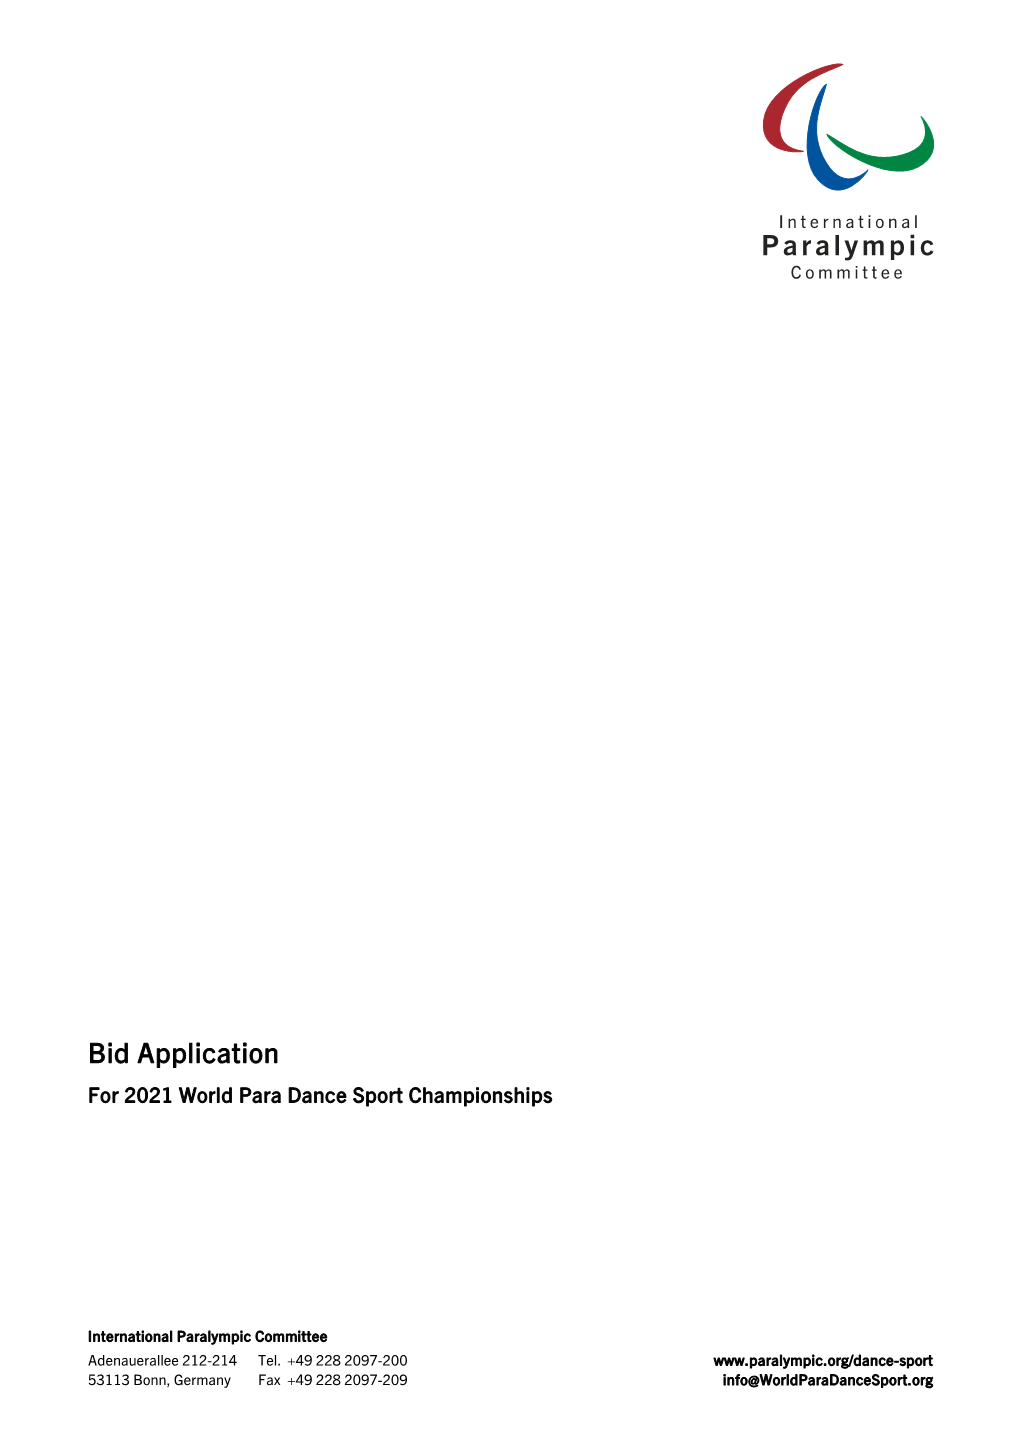 Bid Application for 2021 World Para Dance Sport Championships